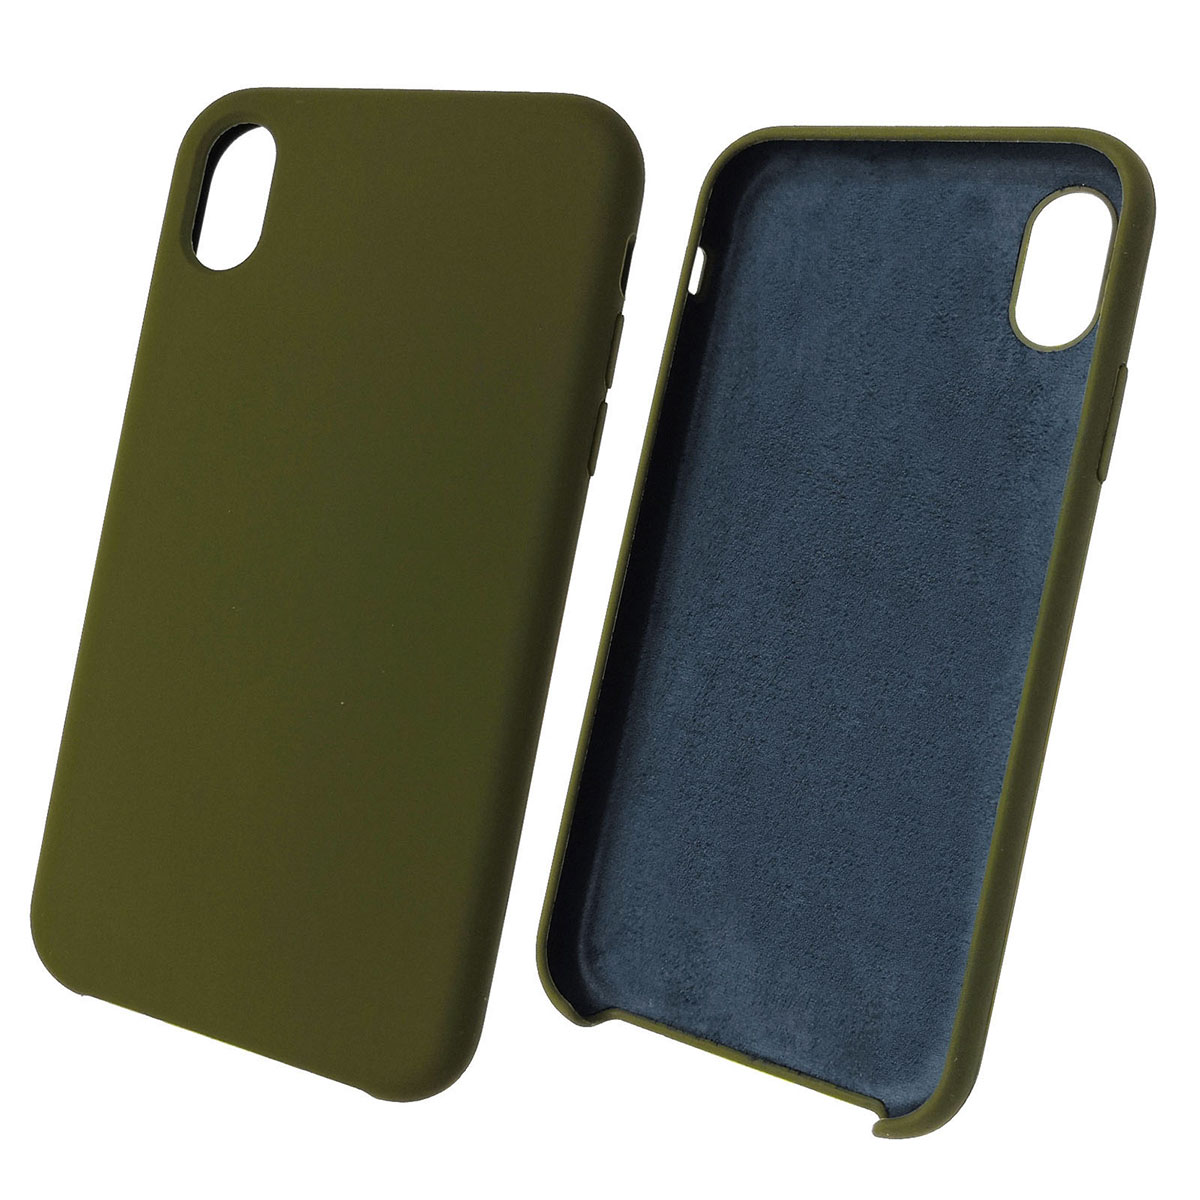 Чехол накладка Silicon Case для APPLE iPhone XR, силикон, бархат, цвет болотный.